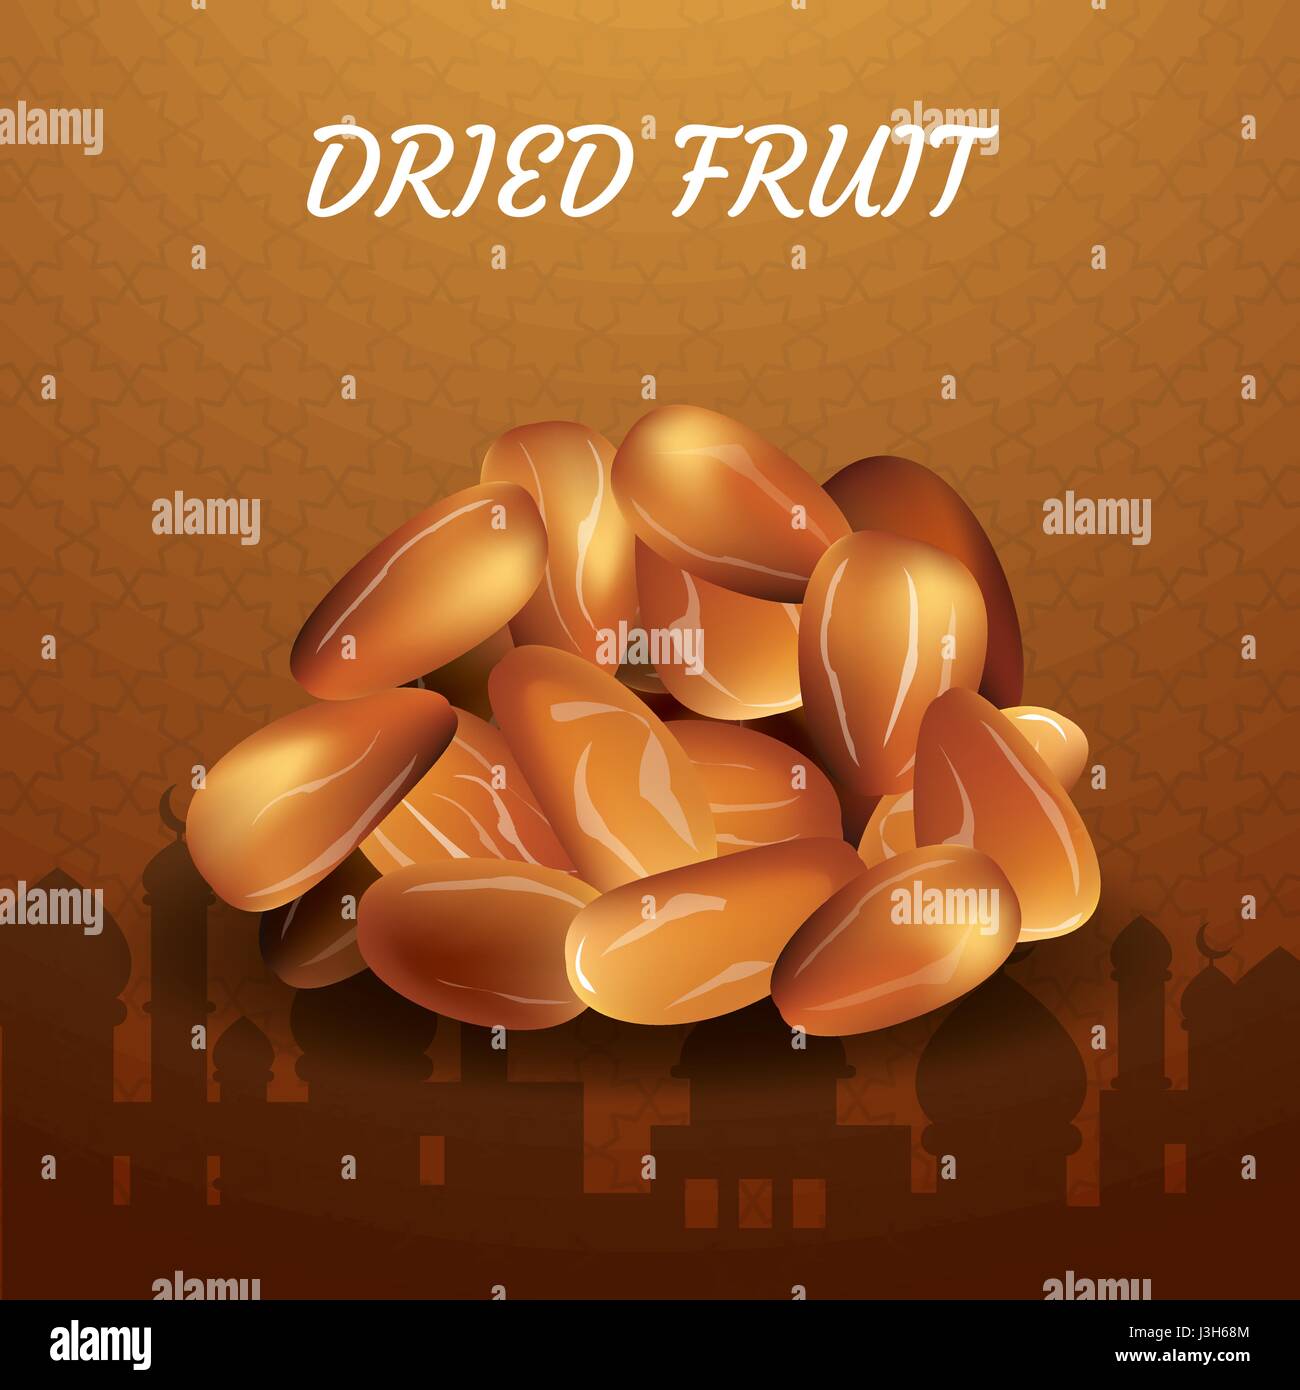 Dried date palm fruits or kurma, ramadan food.Illustration of Eid Kum Mubarak Stock Vector